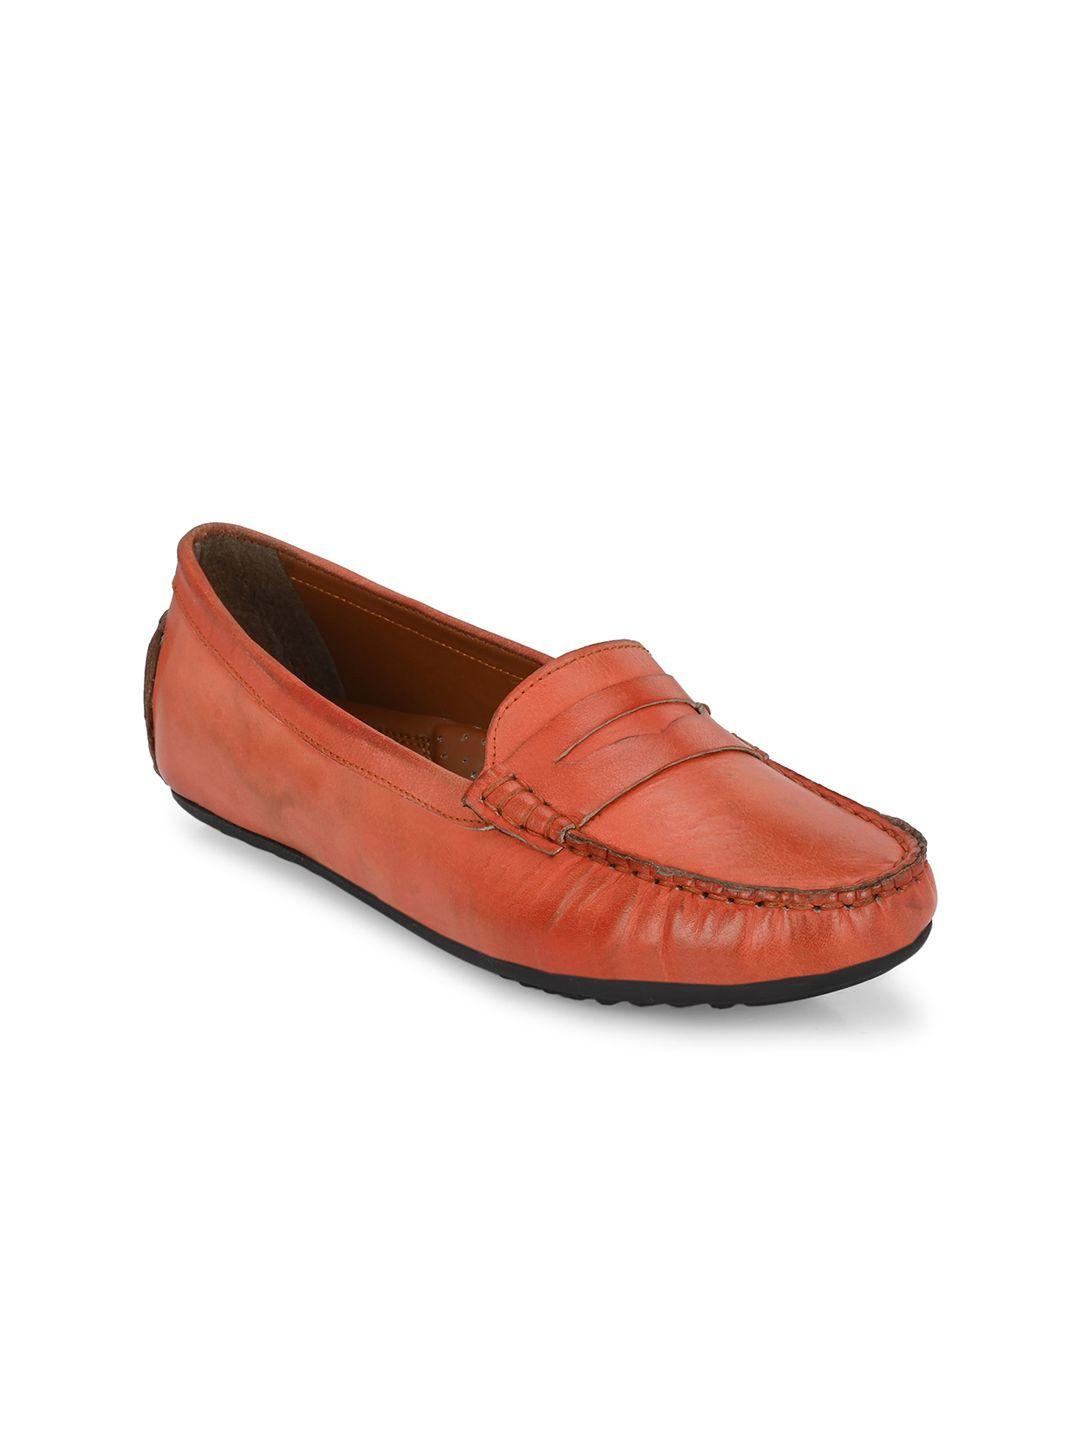 carlo romano women leather lightweight penny loafers